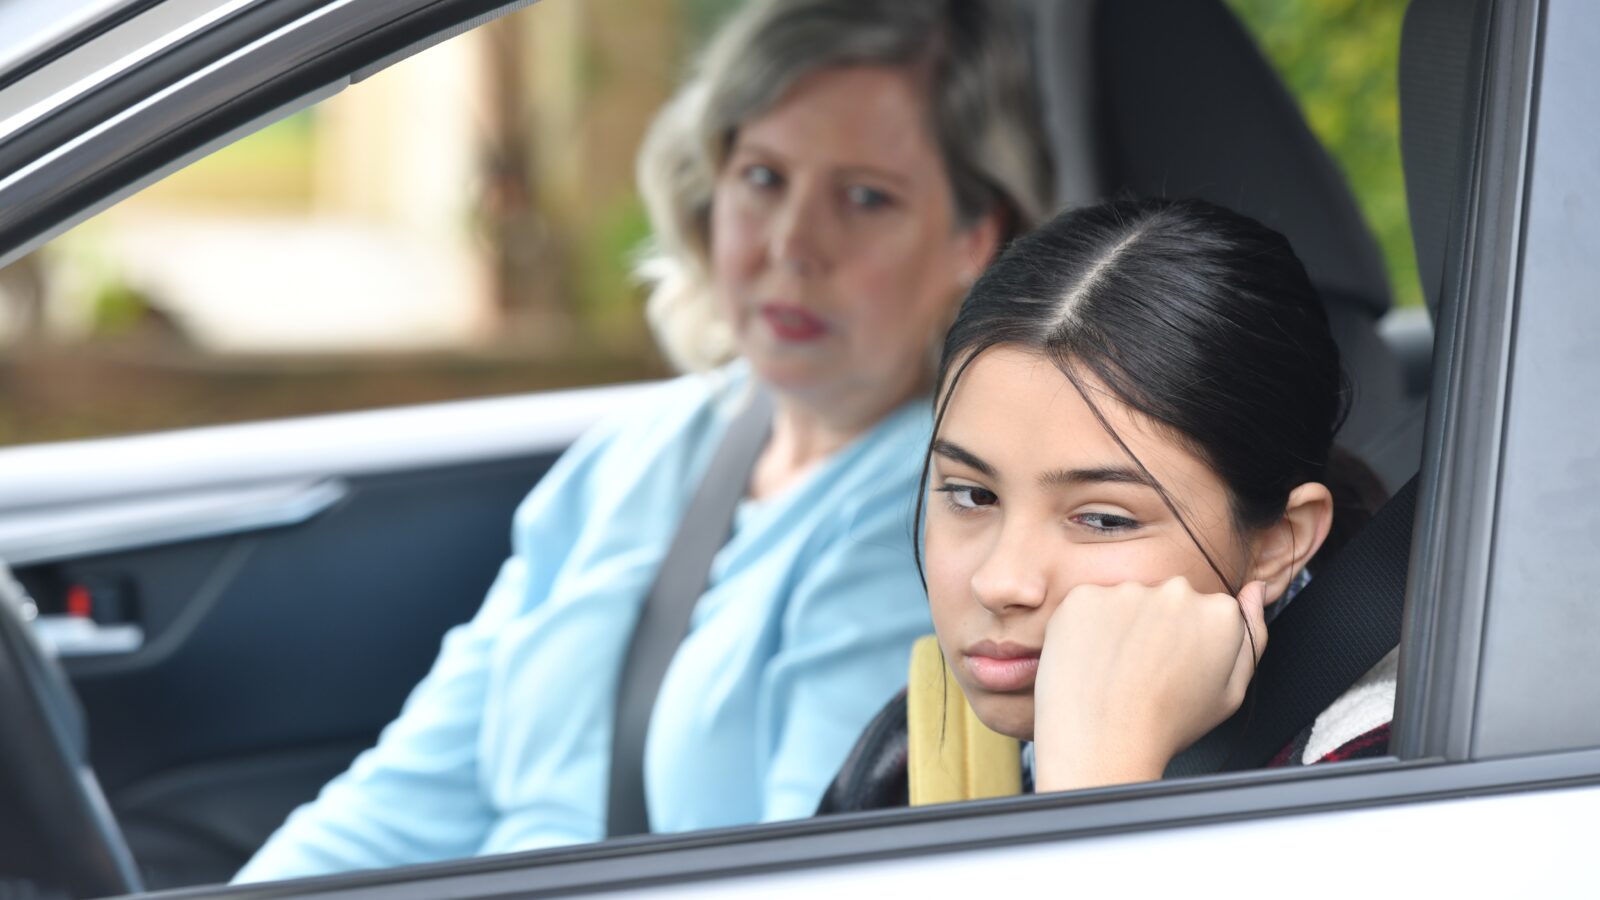 Woman and teenage girl sit in car. Teenage girl annoyed.